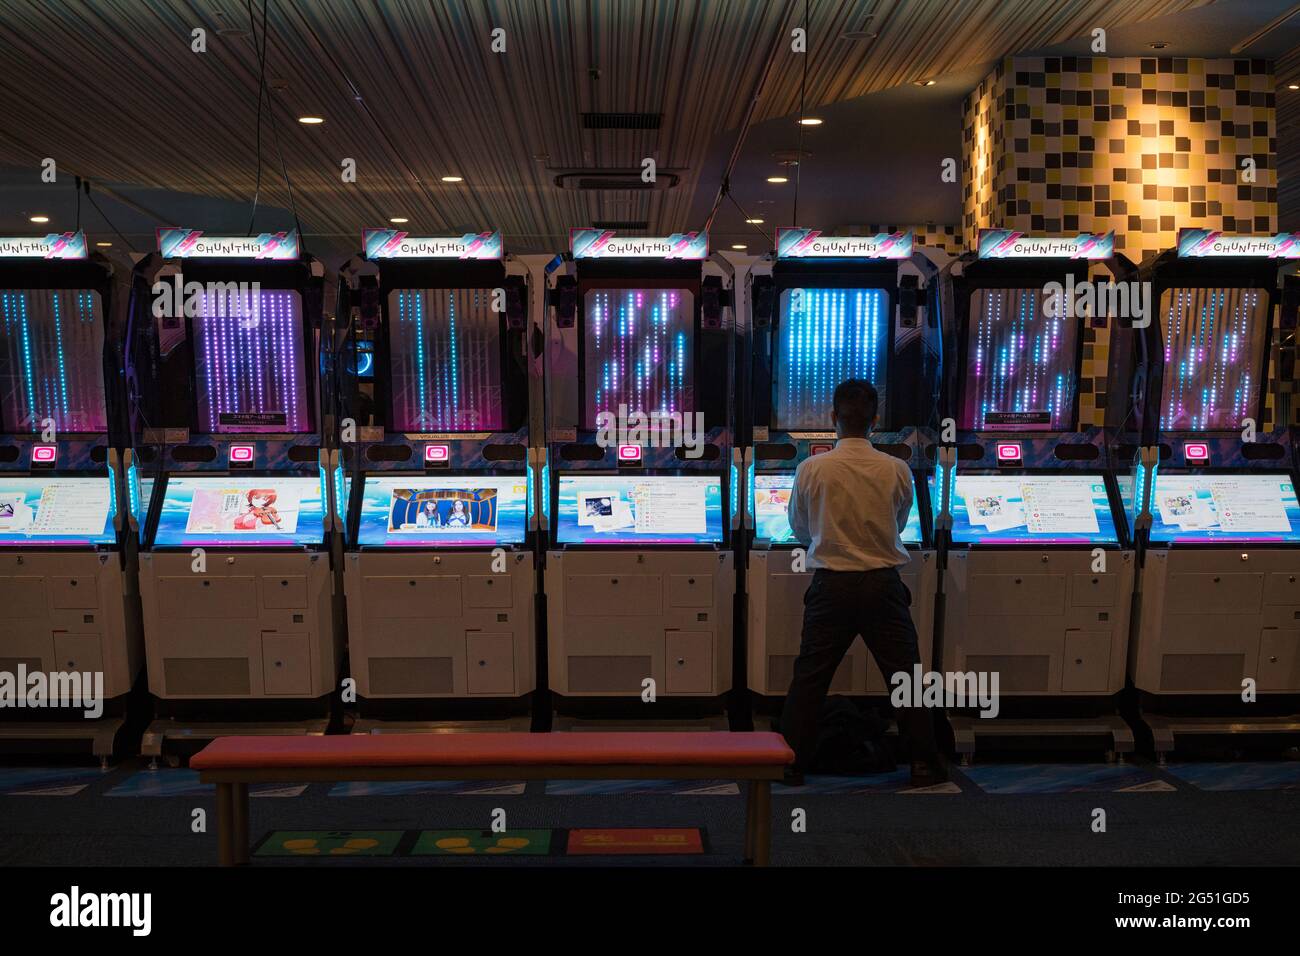 A man playing a Chunithm arcade machine in Japan Stock Photo